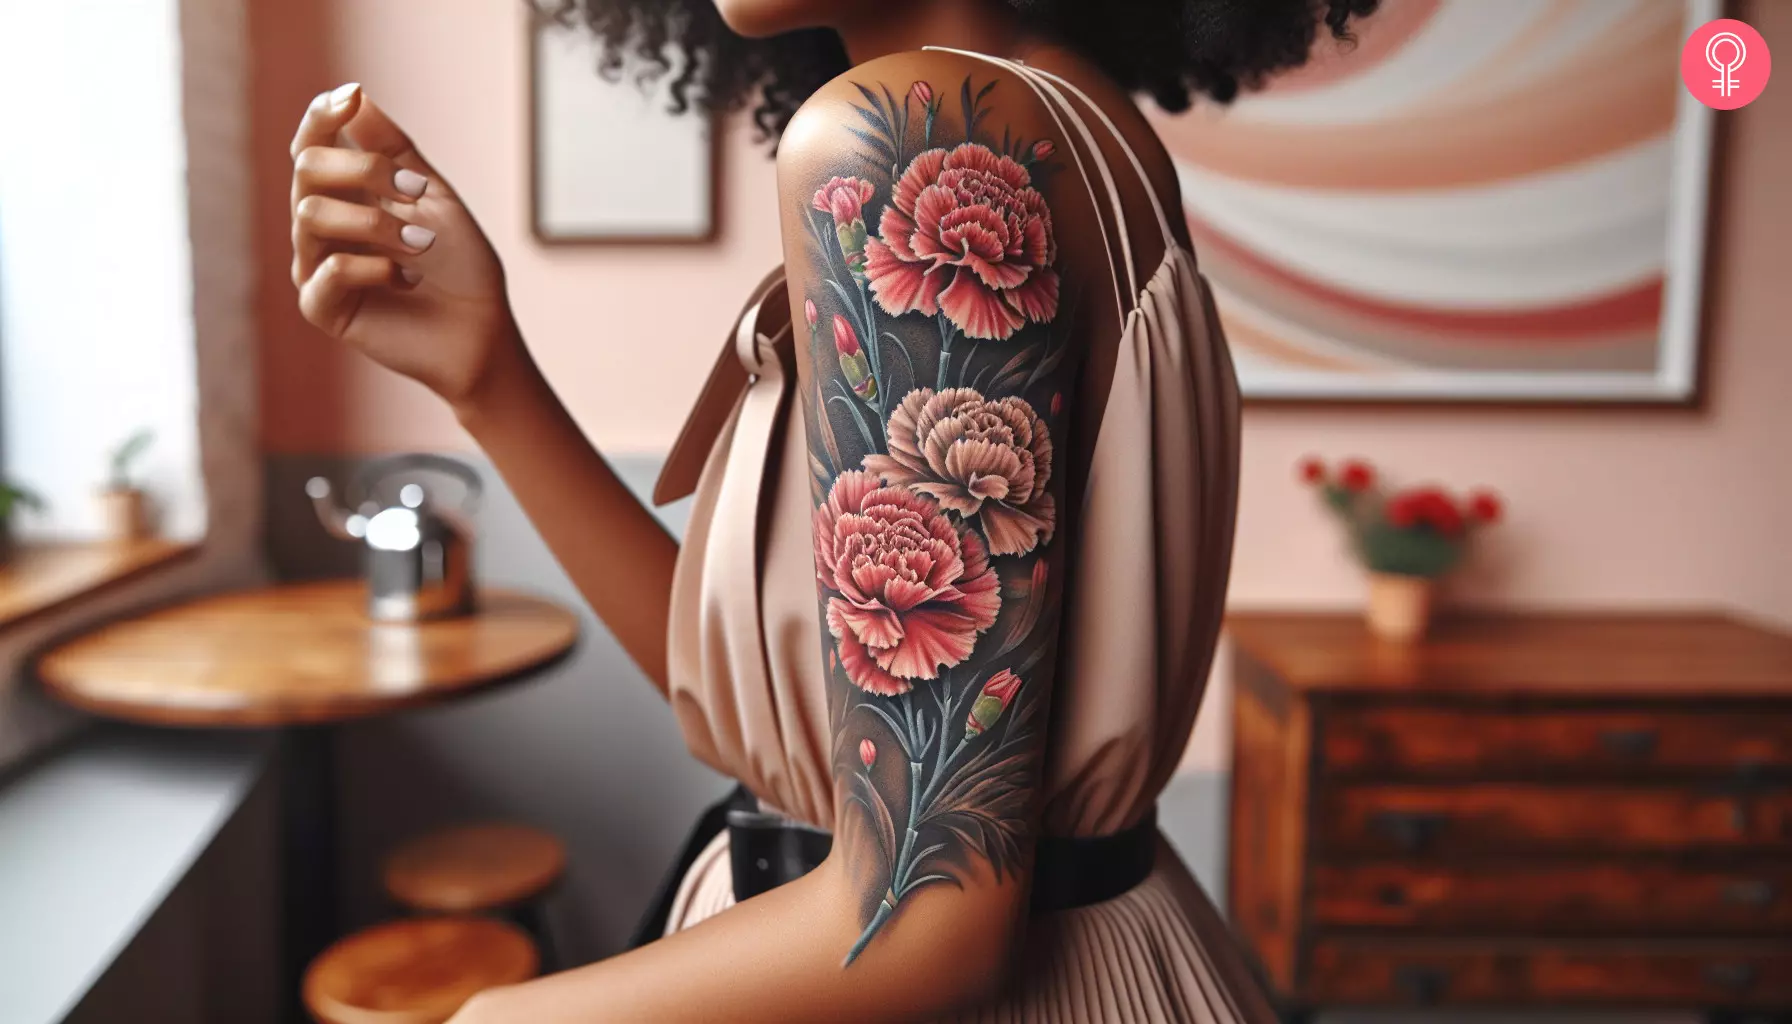 Carnation Sagittarius birth flower tattoo on the arm